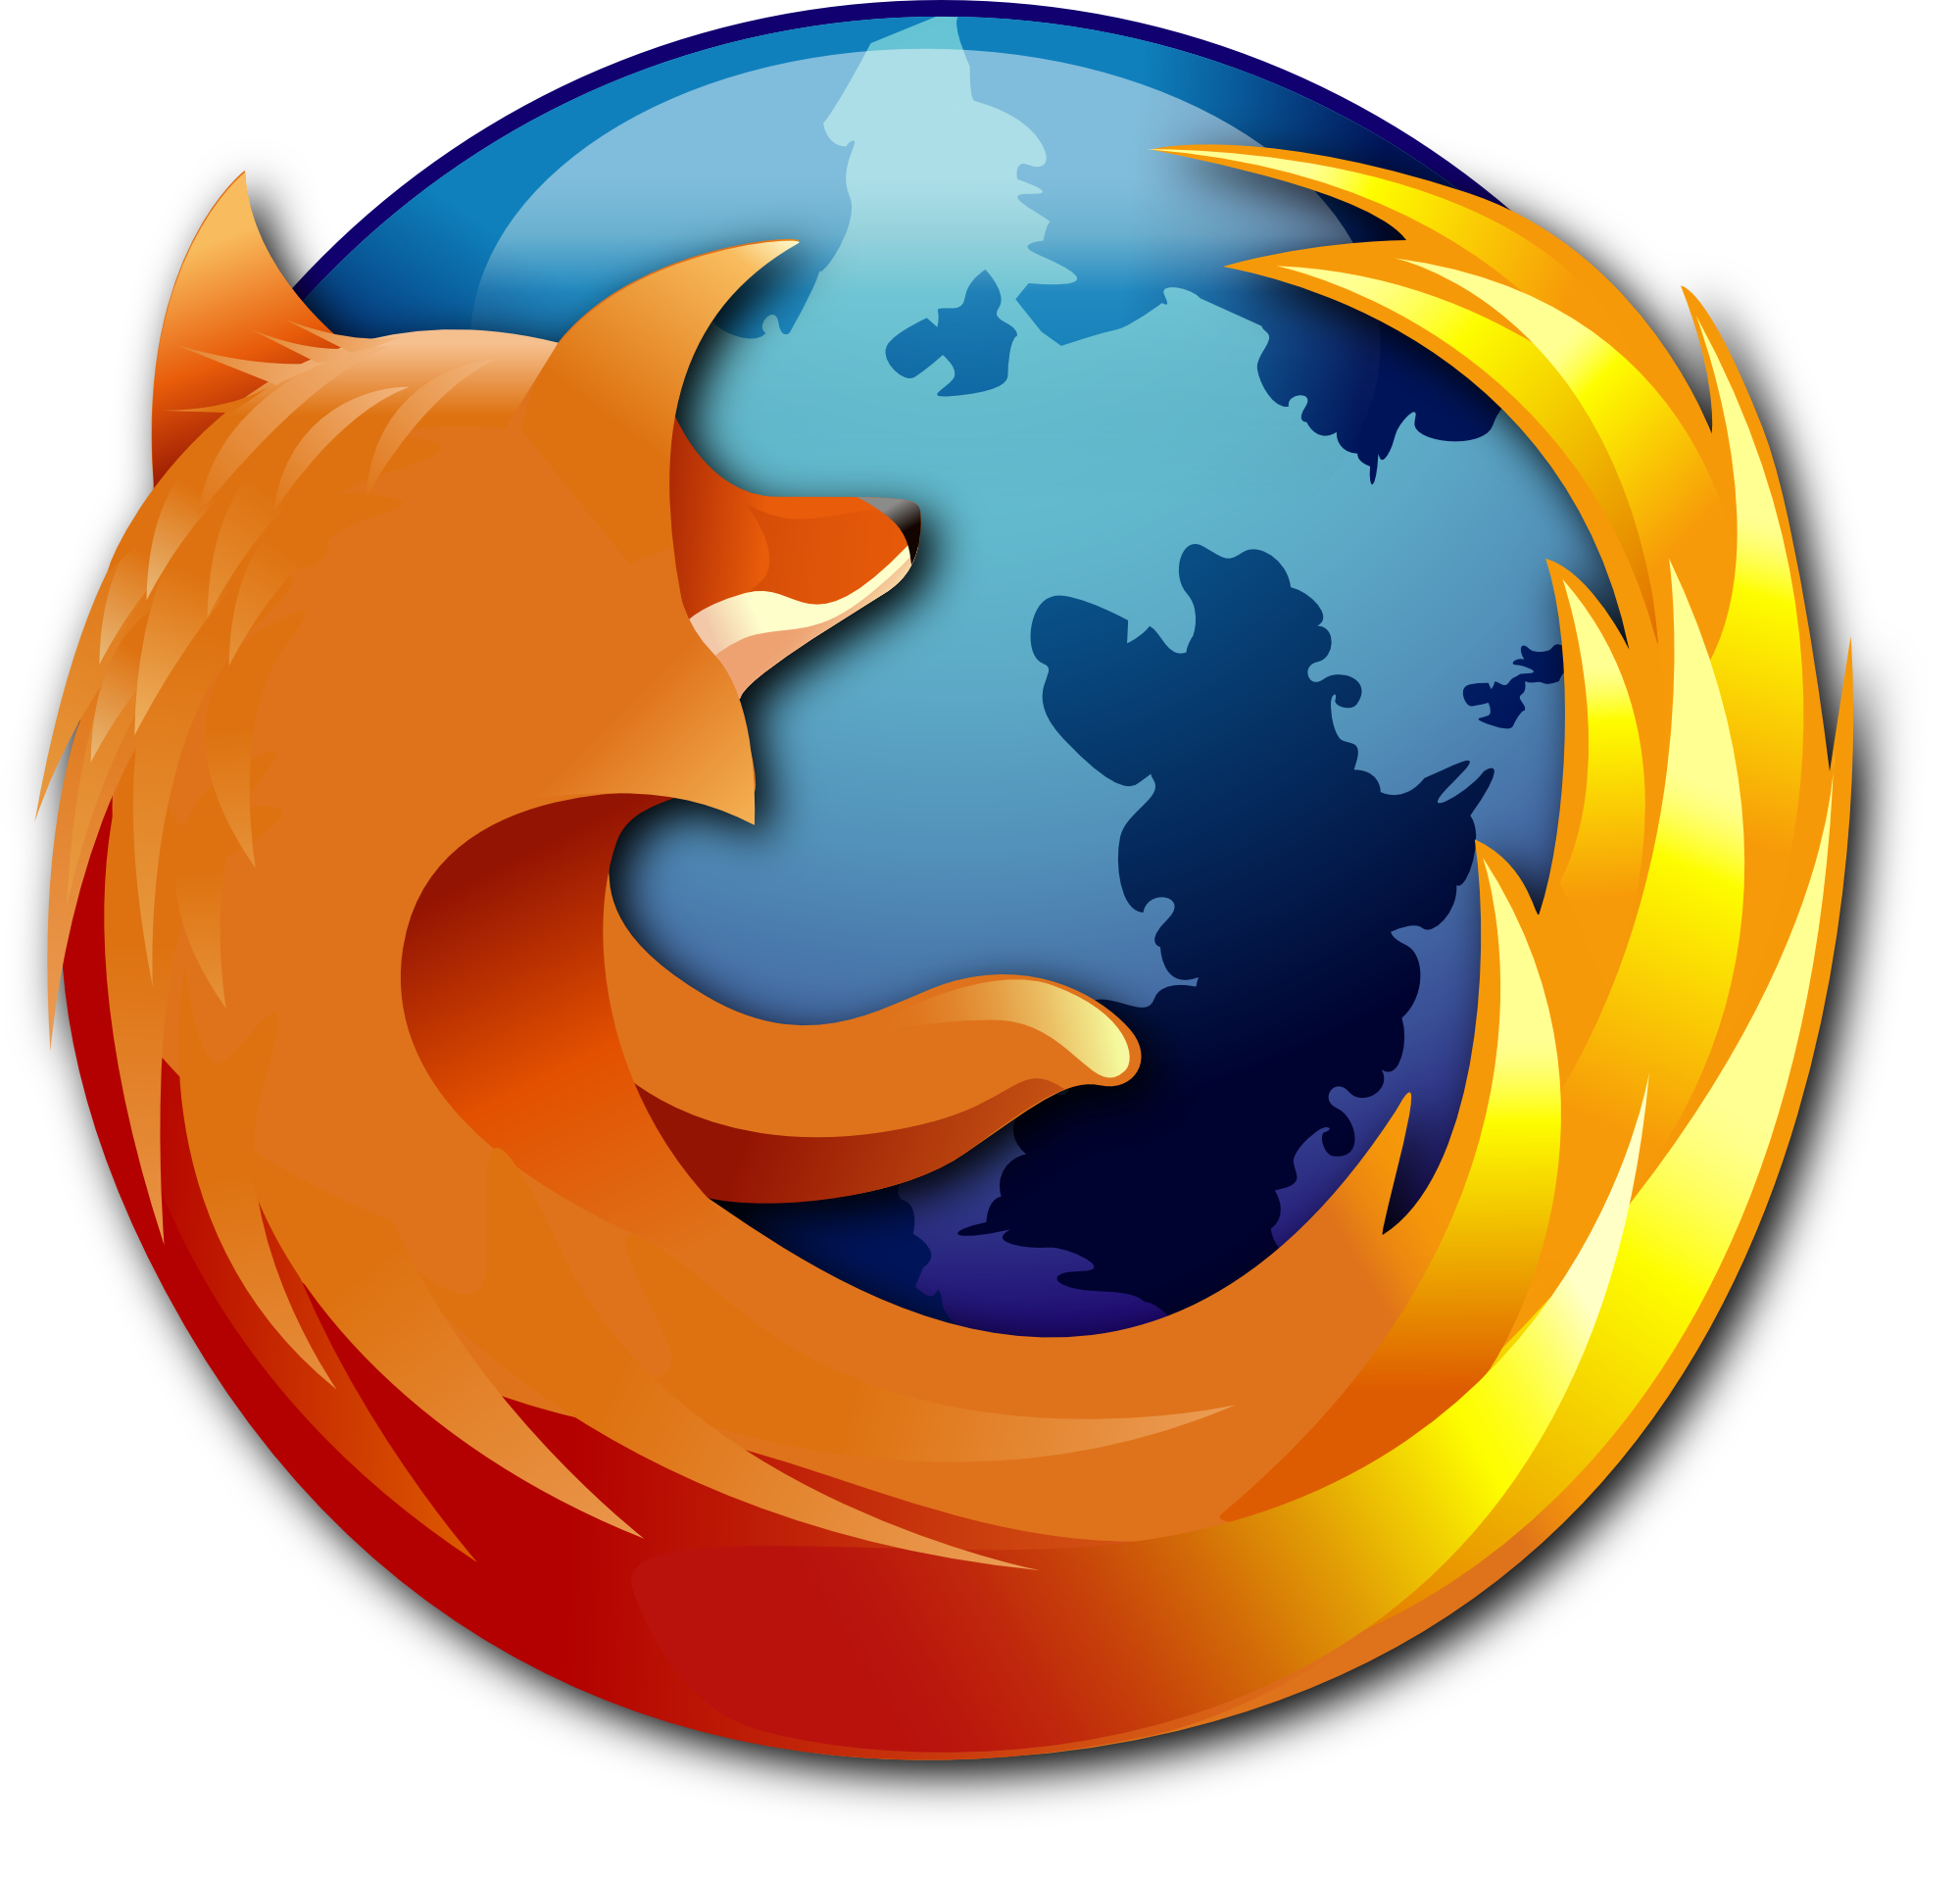 OpenBSD Firefox default upload directory